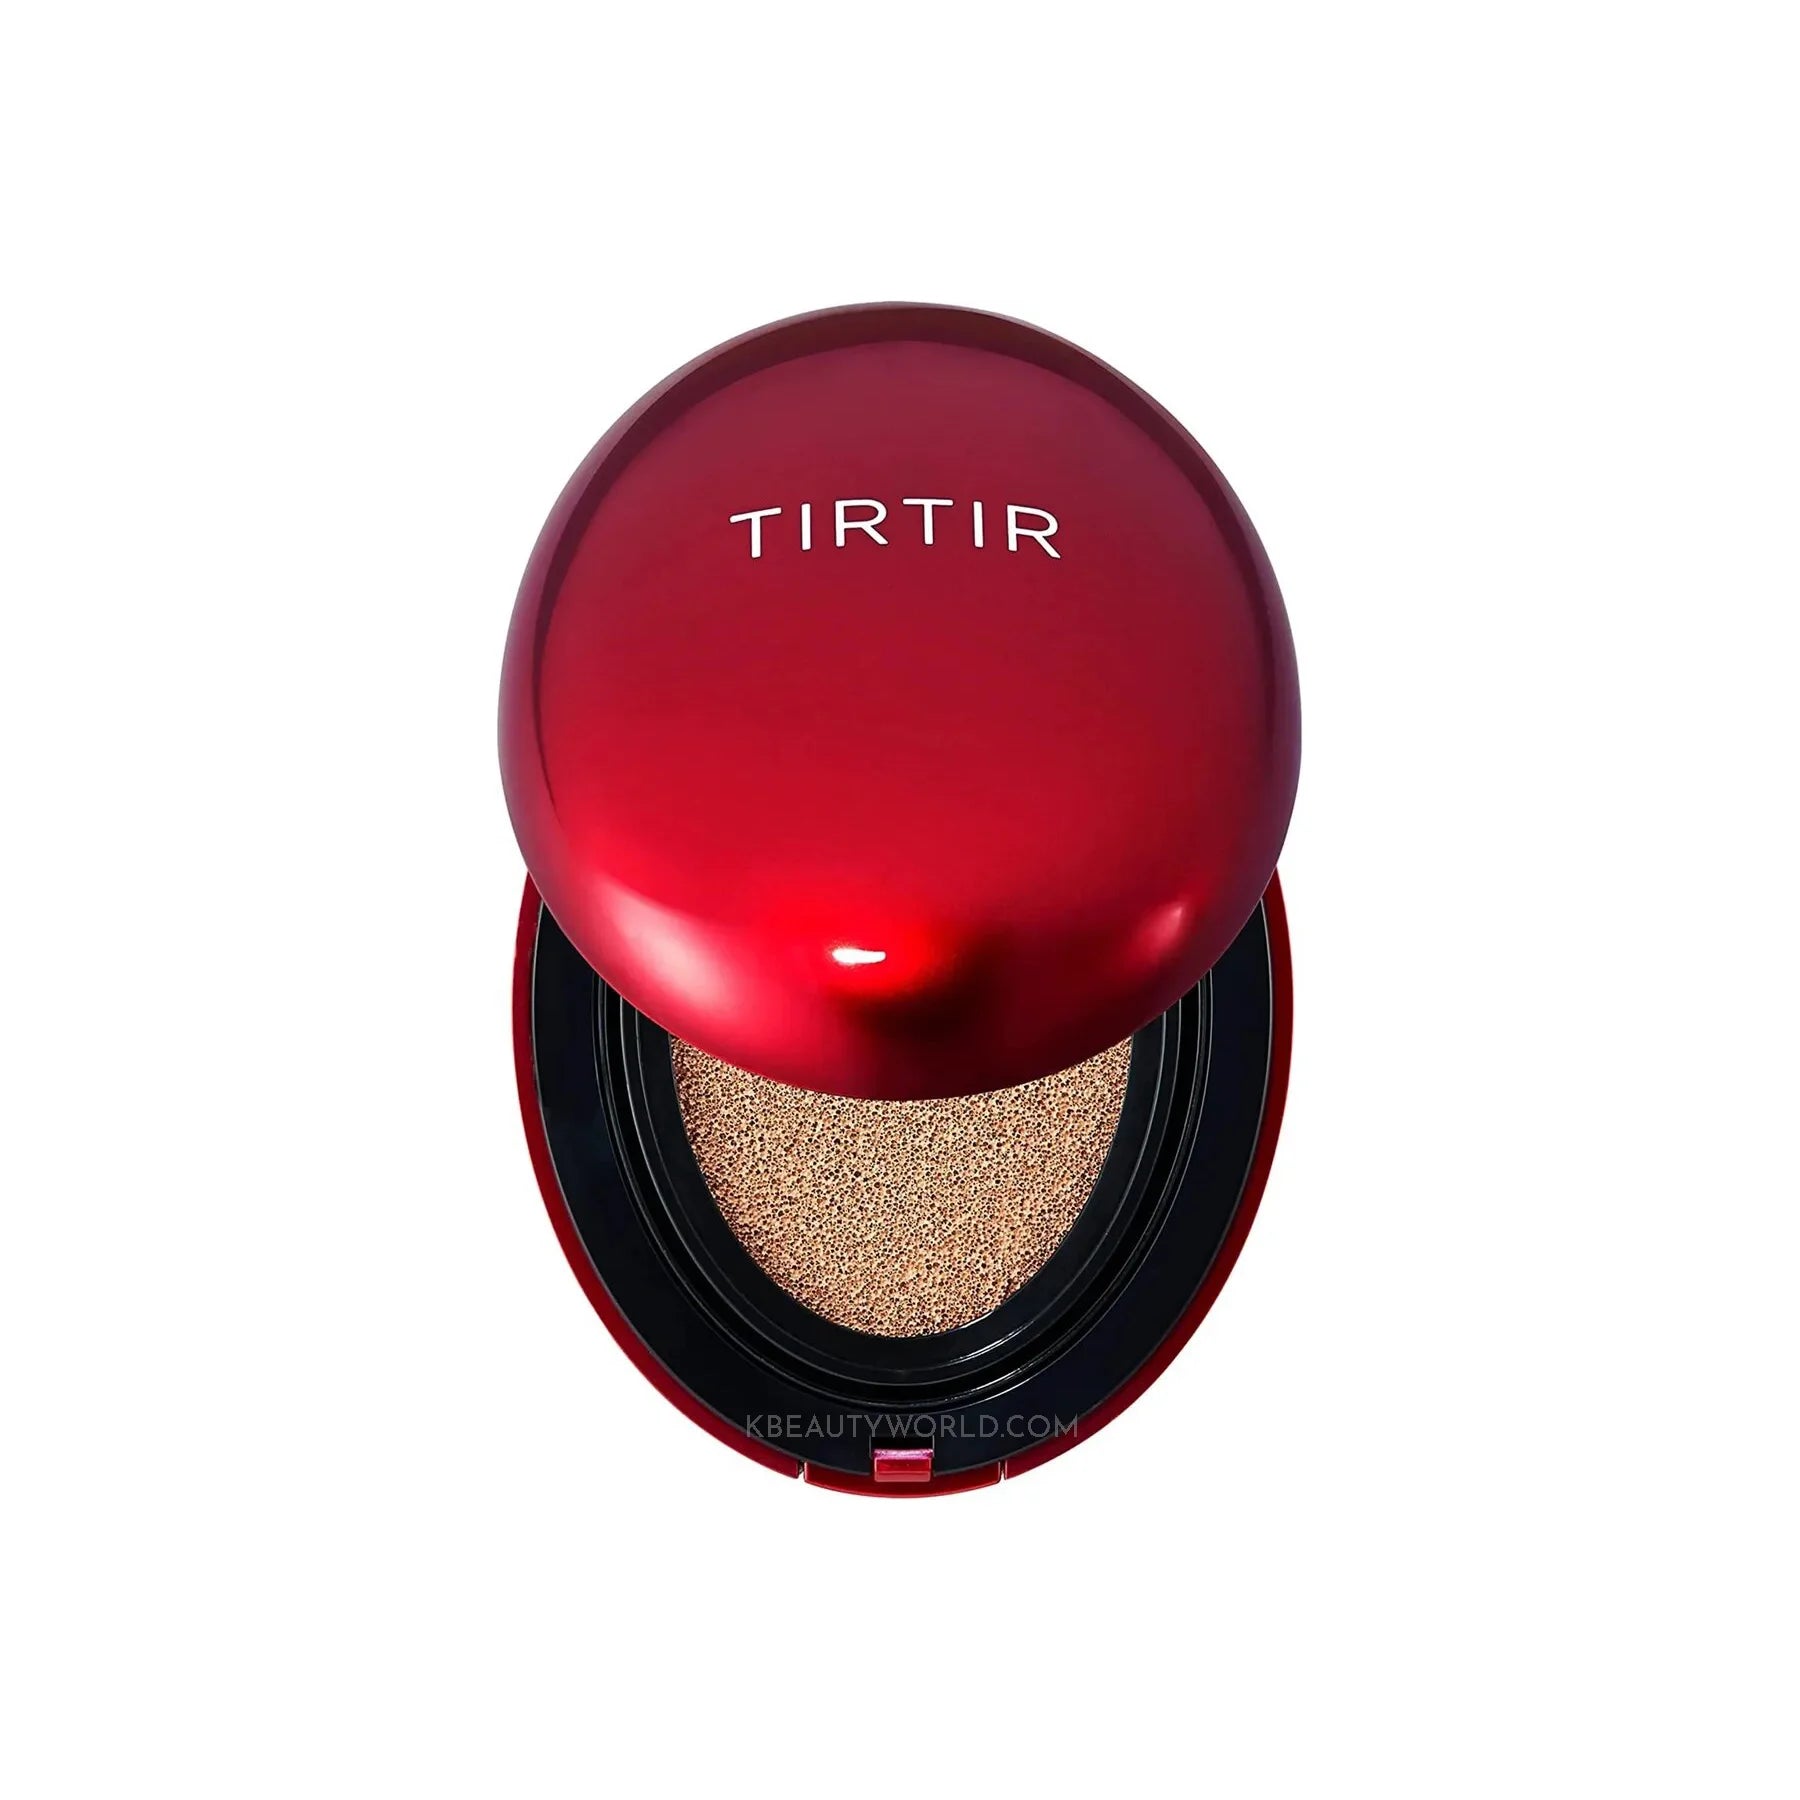 TIRTIR Mask Fit Red Cushion 17C Porcelain 21N Ivory  Sand Korean foundation popular in Japan Asian makeup K Beauty World